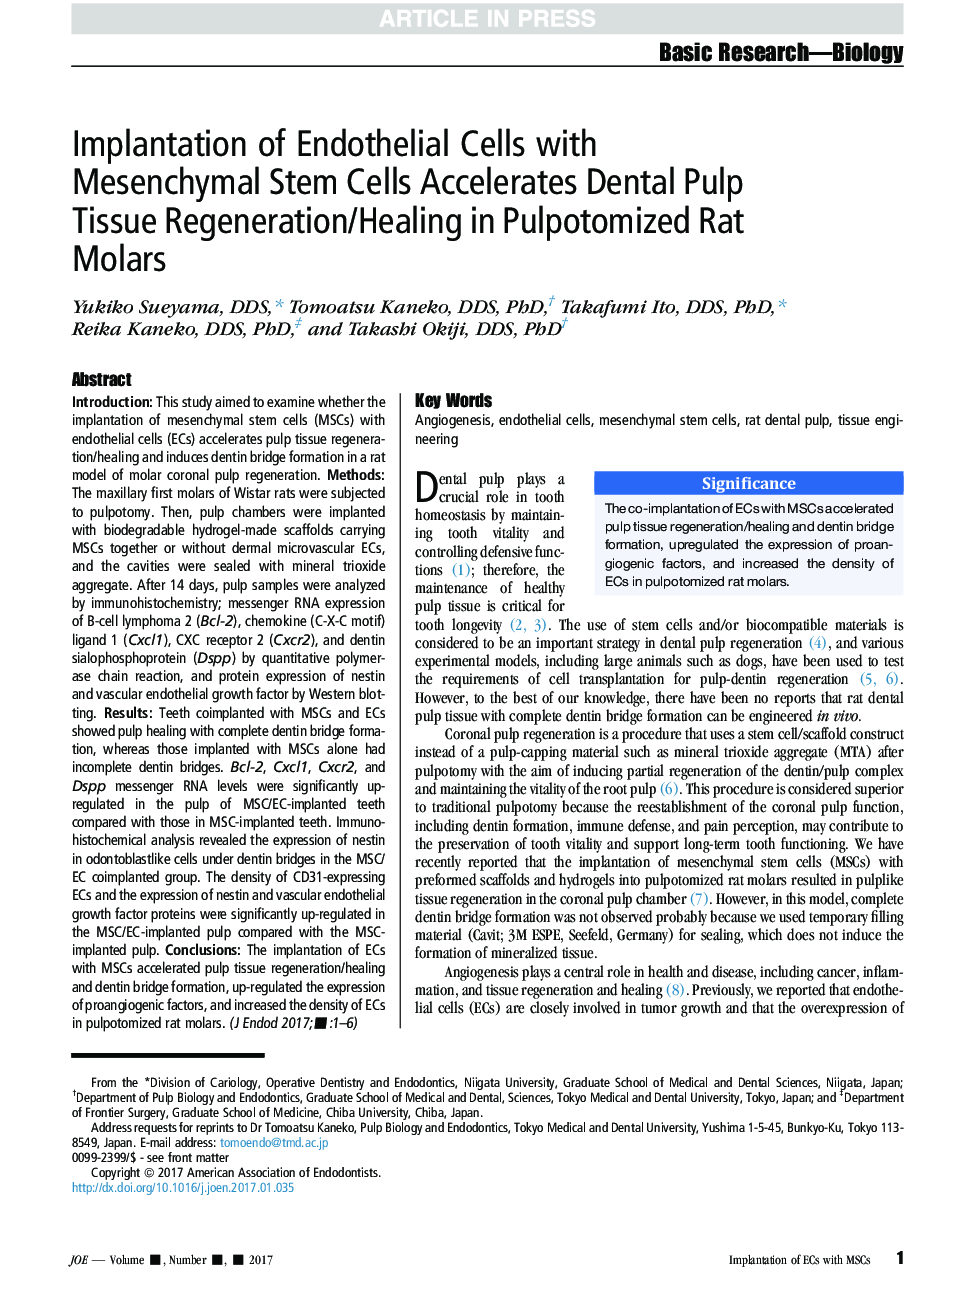 Implantation of Endothelial Cells with Mesenchymal Stem Cells Accelerates Dental Pulp Tissue Regeneration/Healing in Pulpotomized Rat Molars